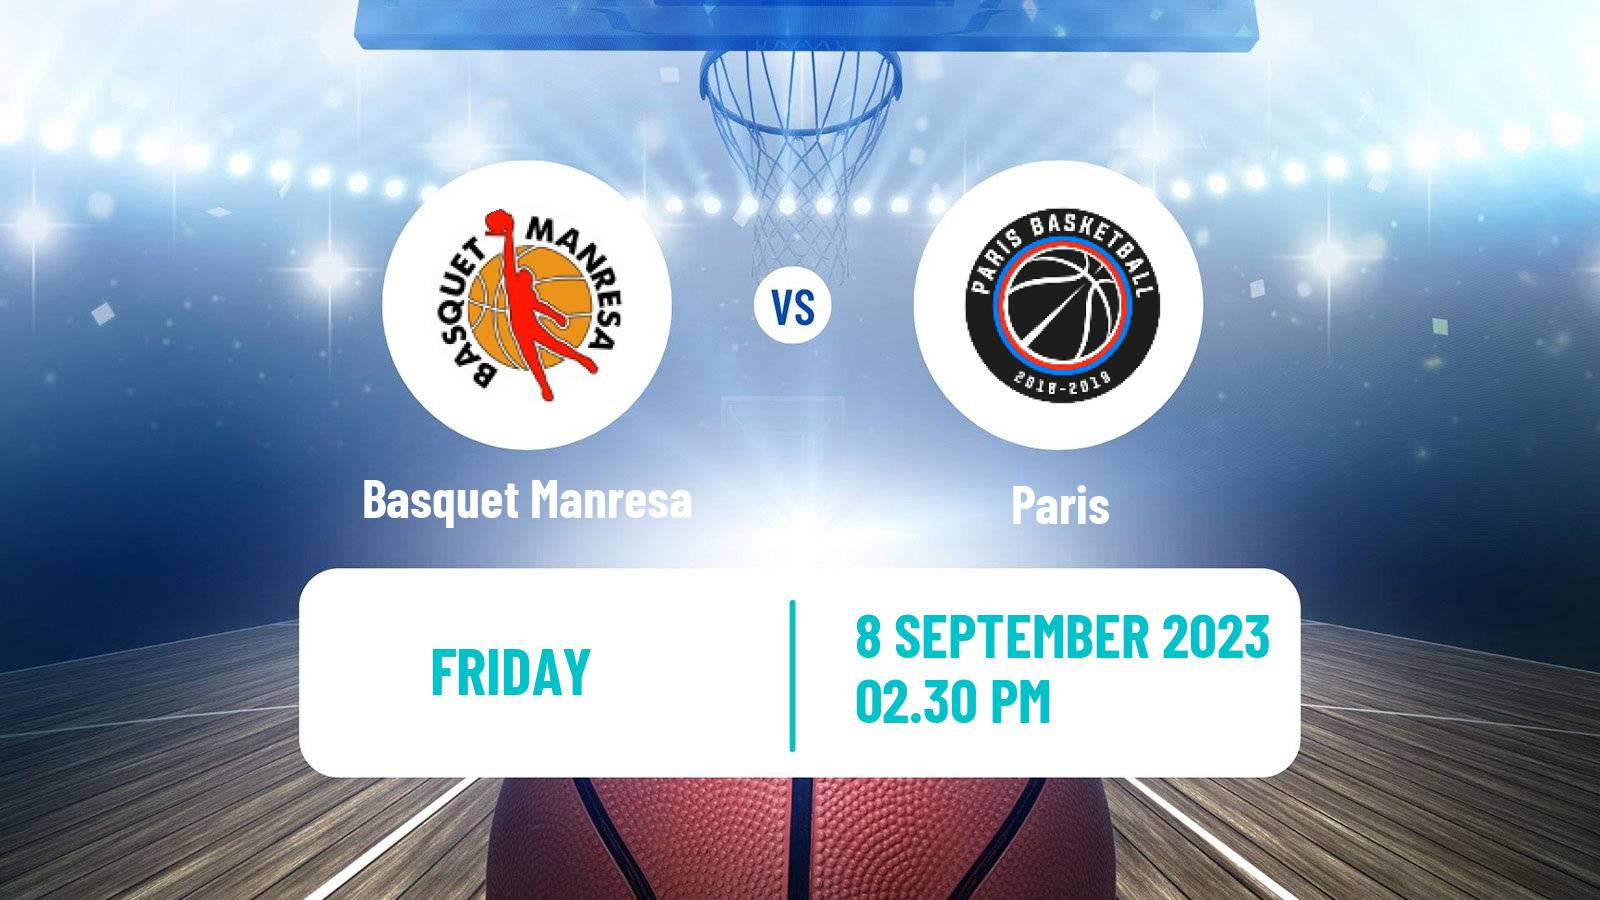 Basketball Club Friendly Basketball Basquet Manresa - Paris